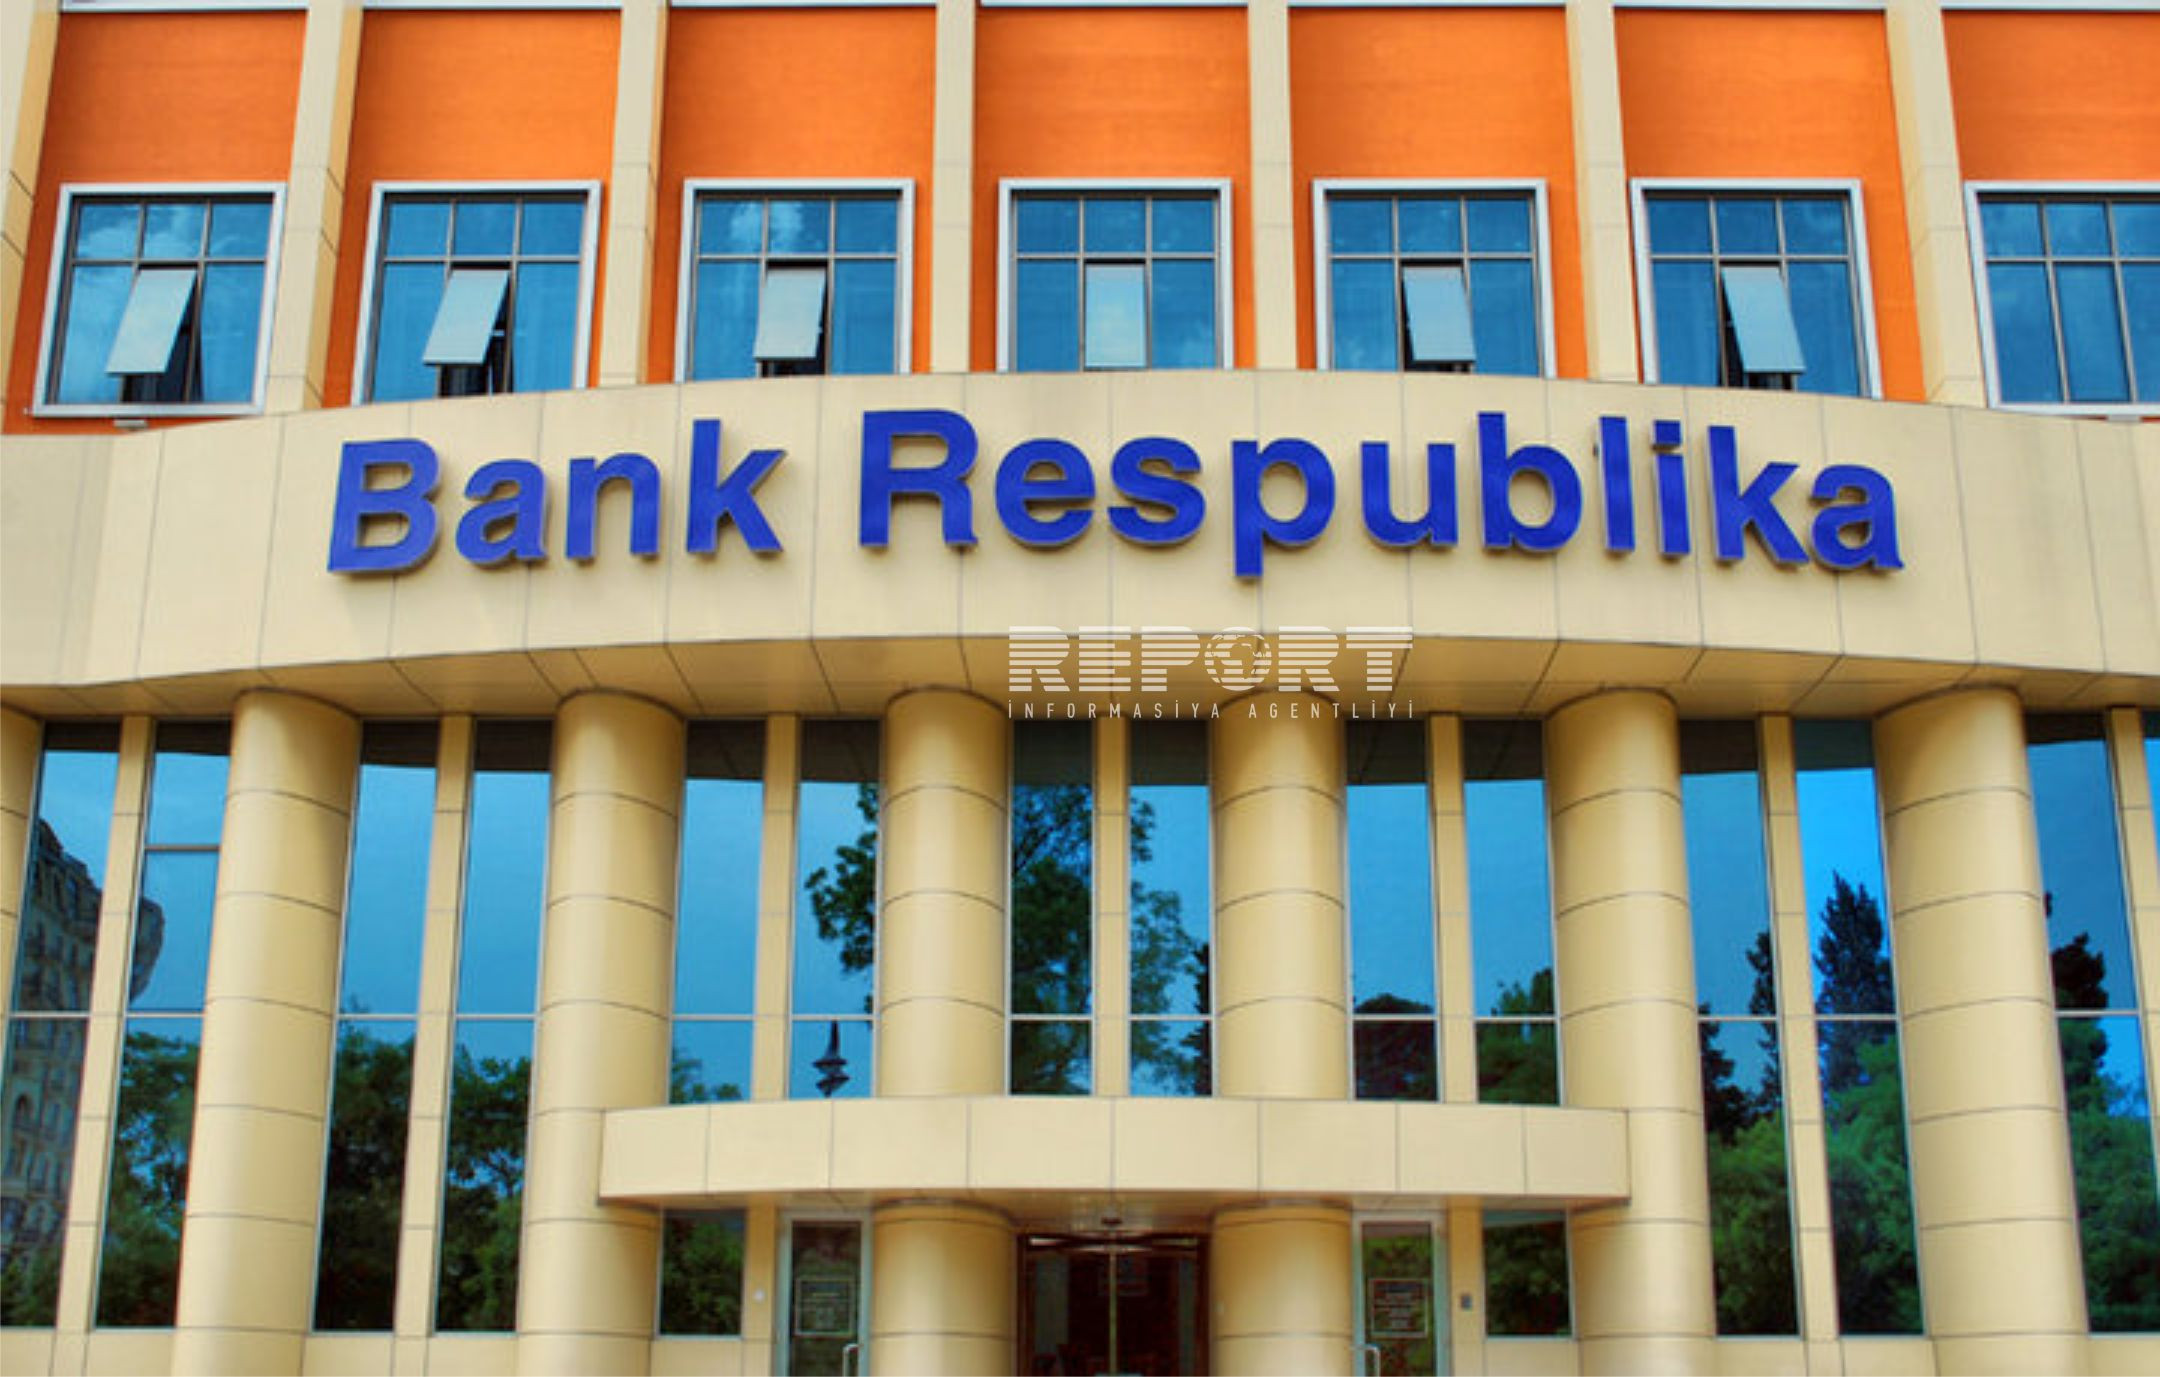 Respublika. Bank Respublika. Азербайджан банк Республика. Bank Respublika logo. Gəncə Bank Respublika.